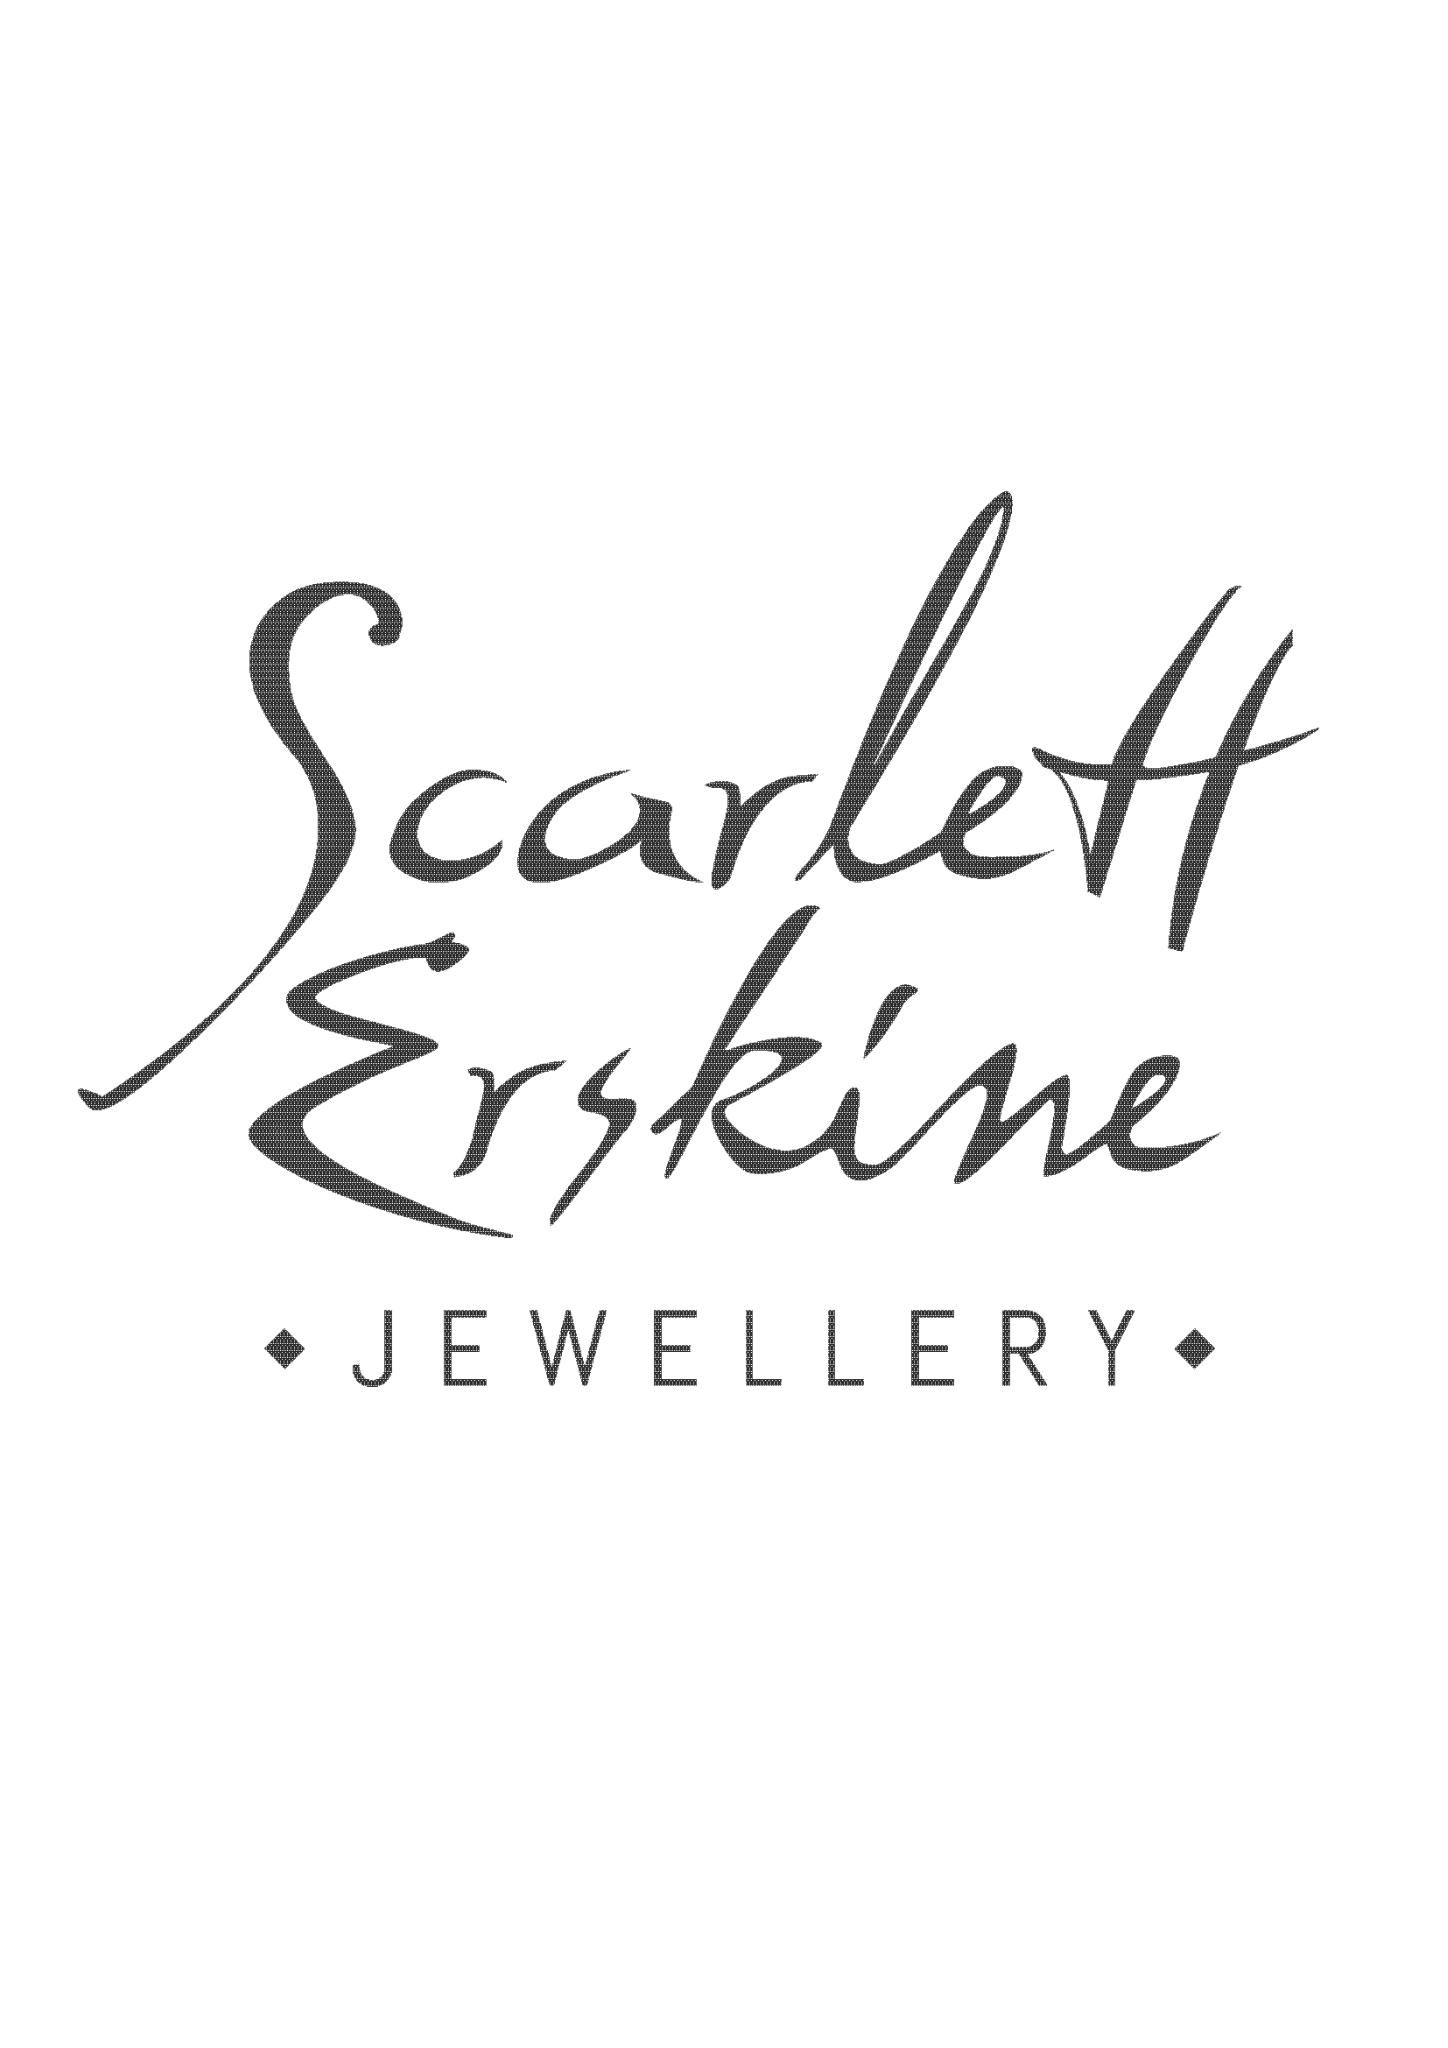 Scarlett Erskine Jewellery | Bespoke Jewellery Designer